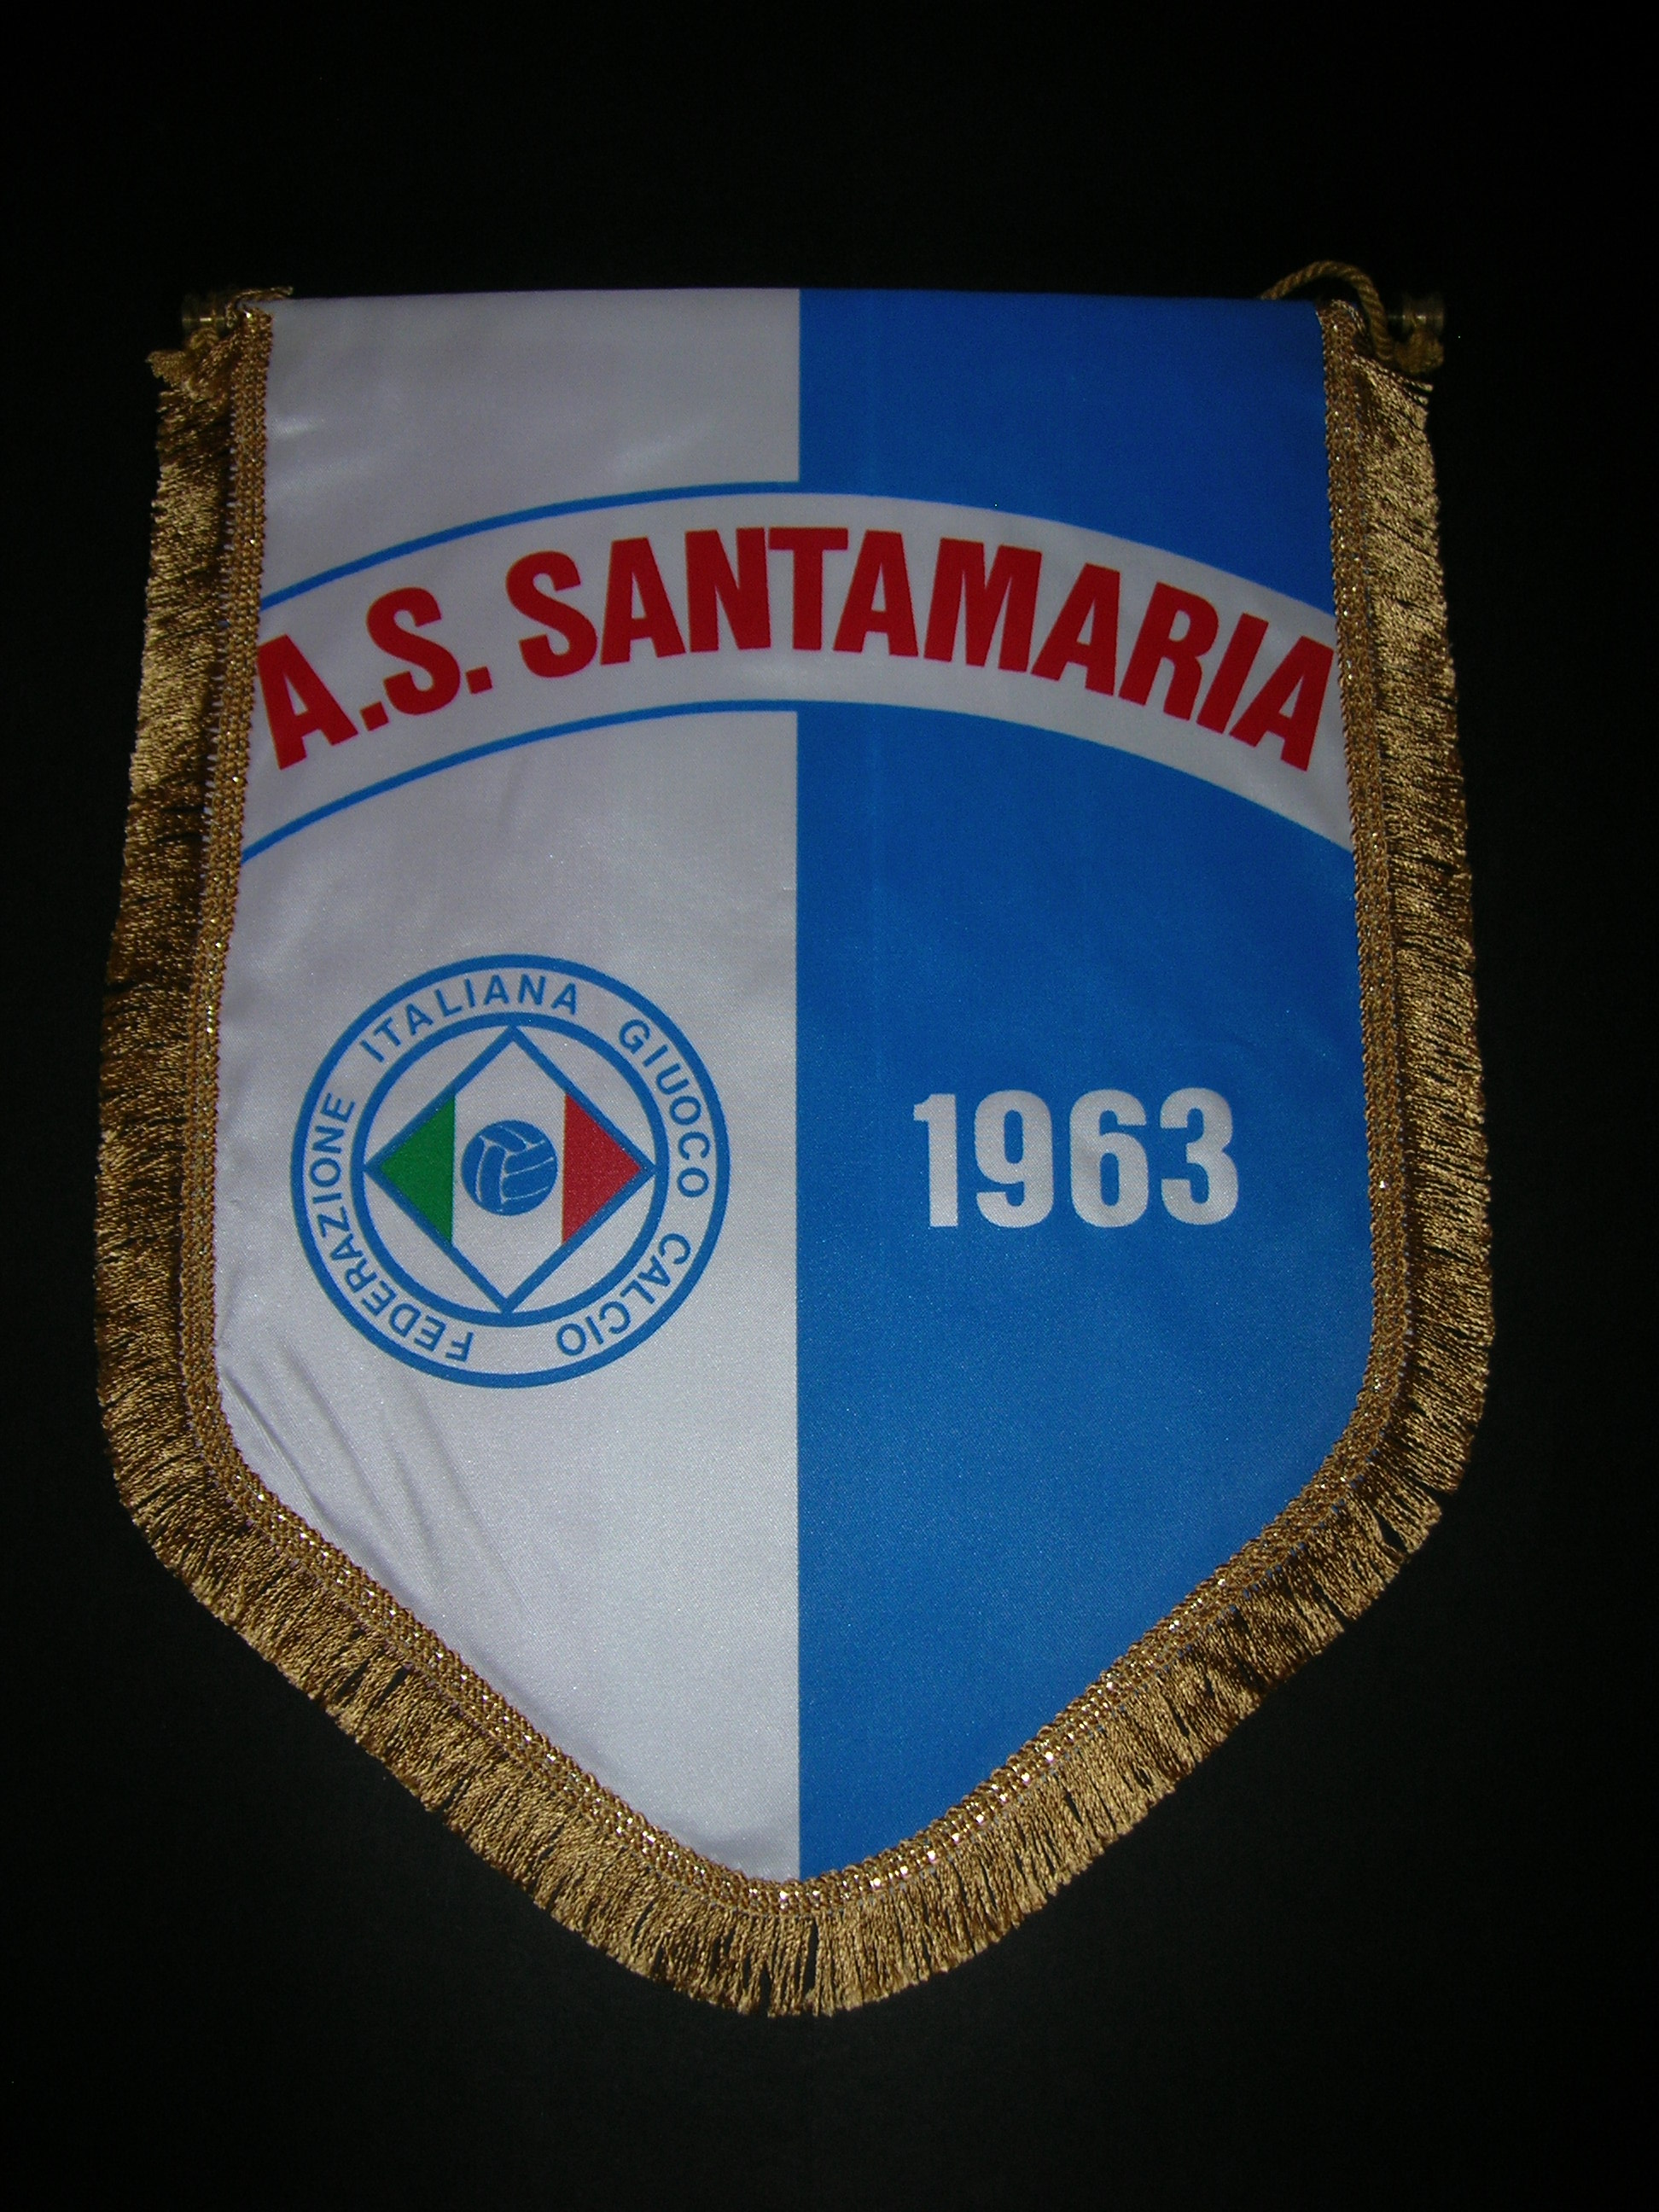 A S.  Santamaria  246